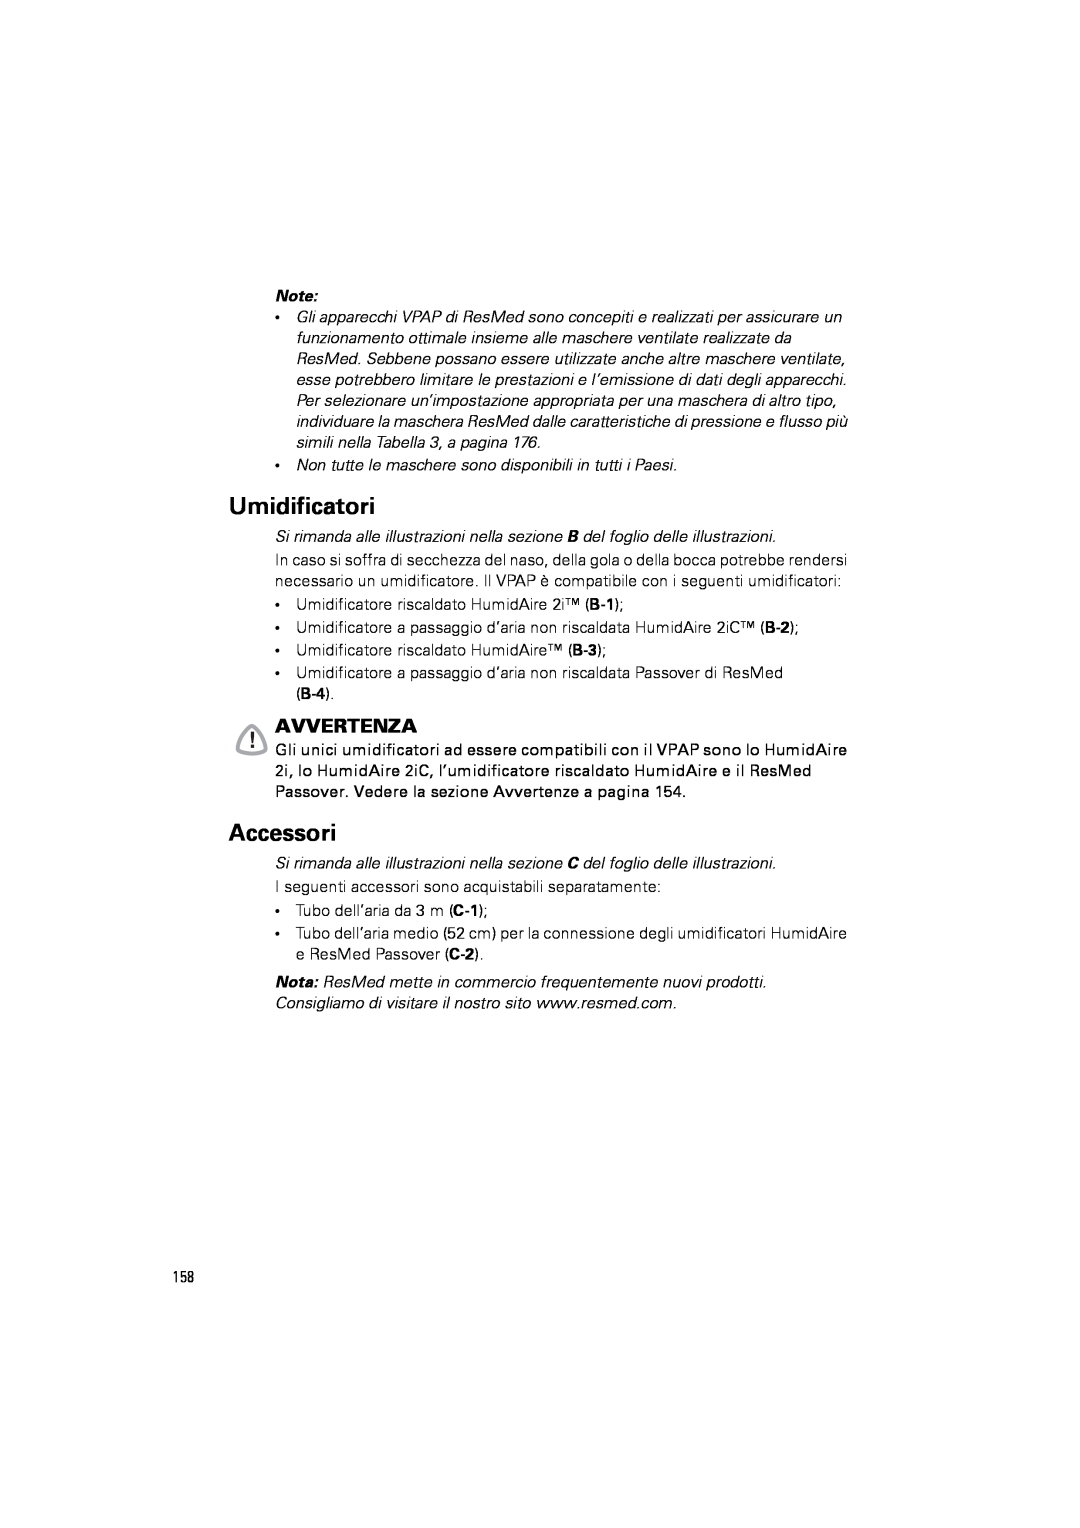 ResMed III & III ST user manual Umidificatori, Accessori, Avvertenza 